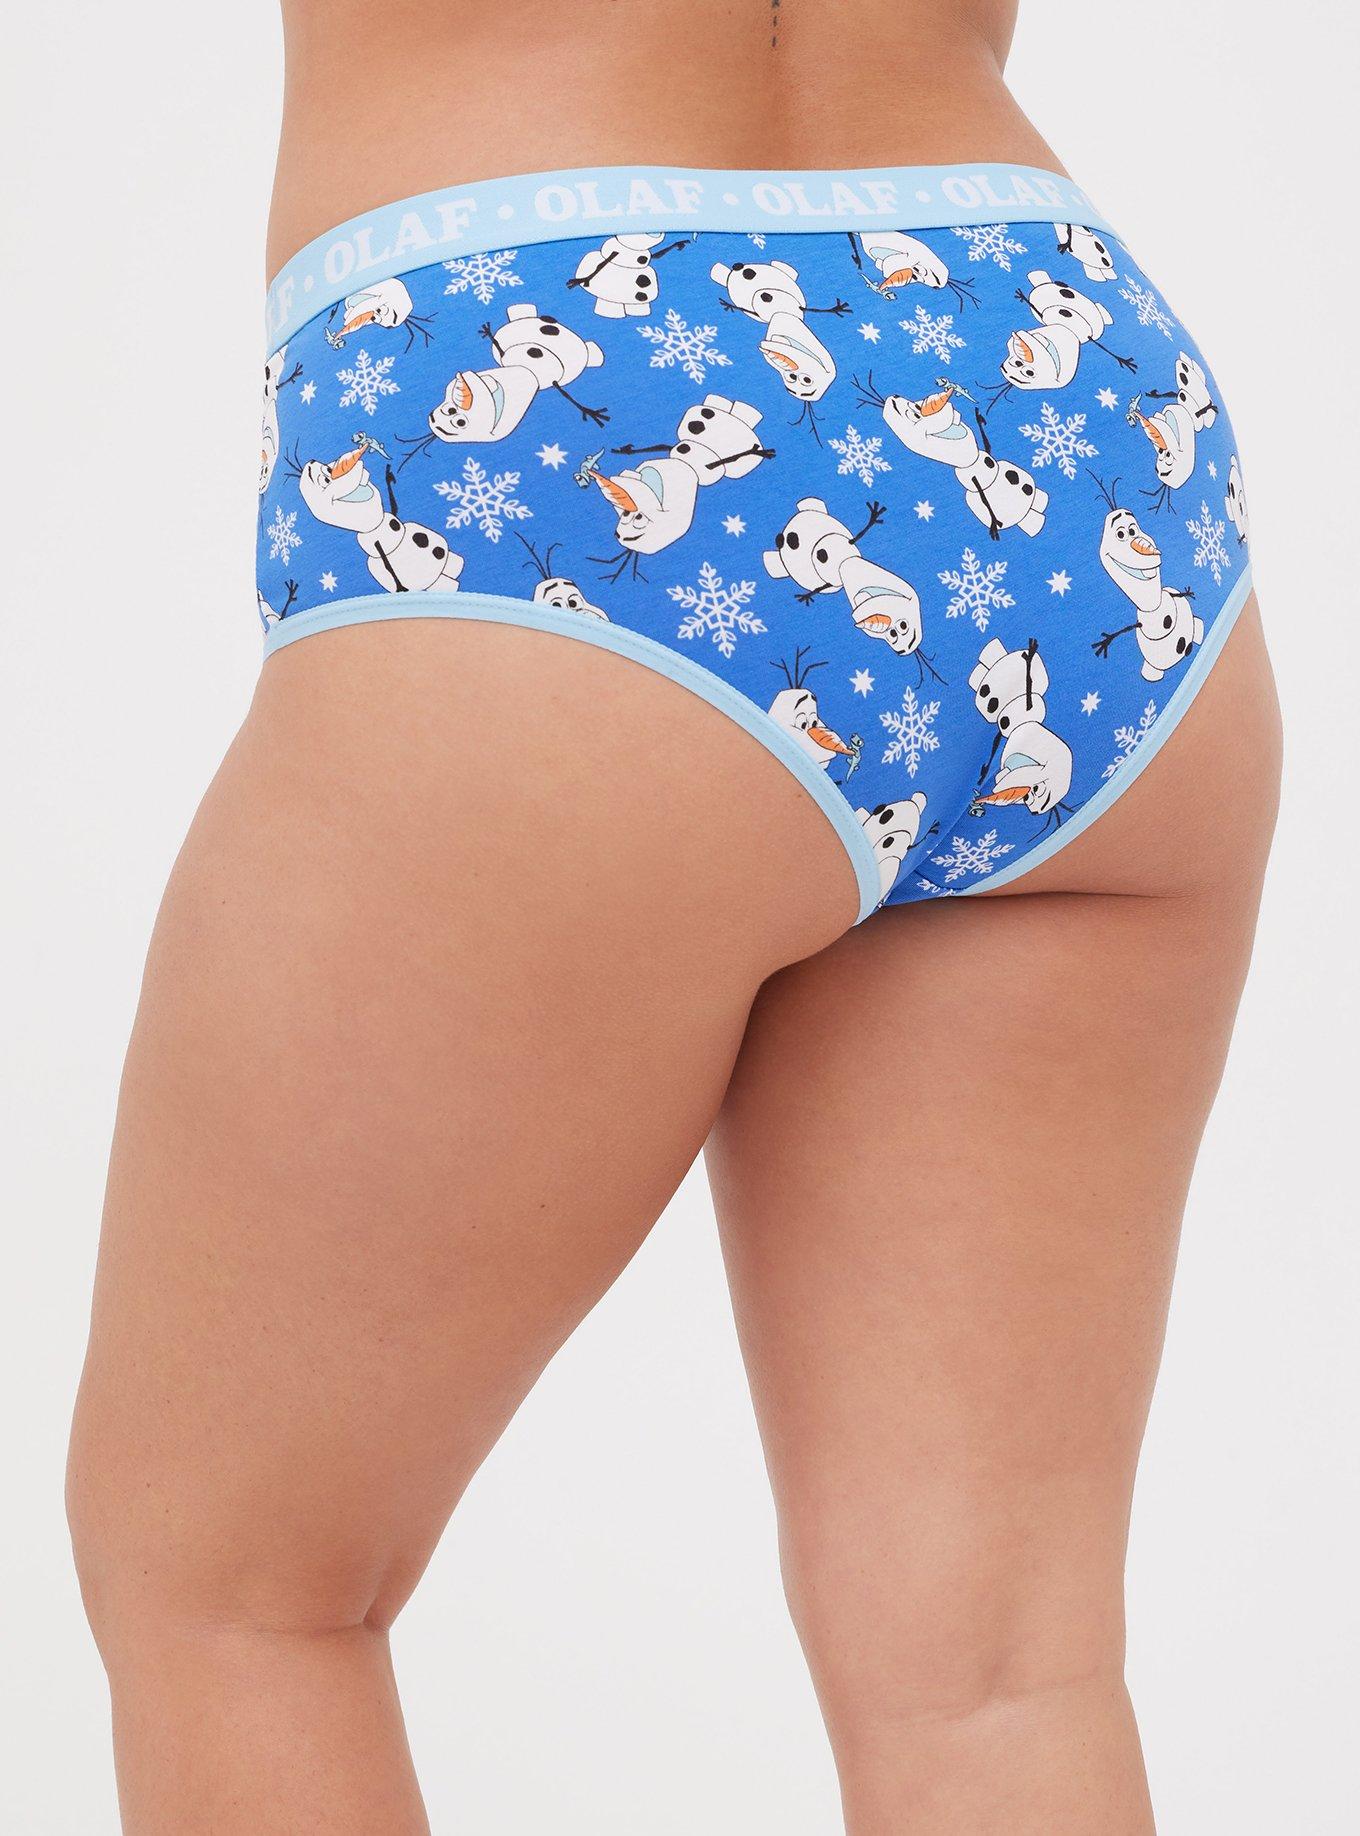 Plus Size - Walt Disney Frozen Cheeky Panty - Cotton Olaf Blue - Torrid